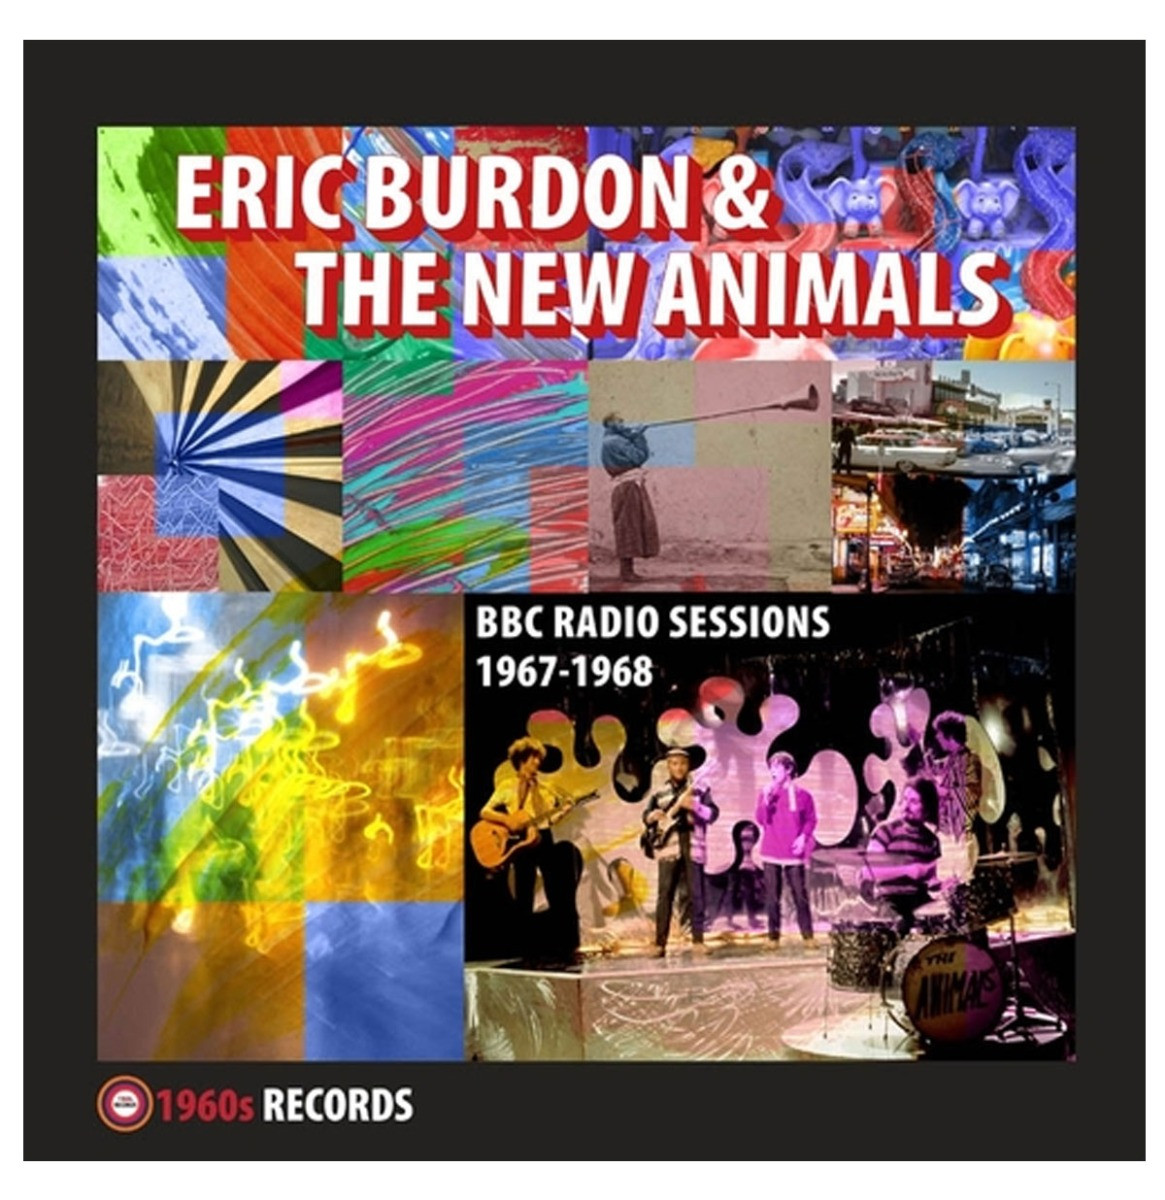 Eric Burdon & The New Animals - BBC Radio Sessions 1967-1968 LP